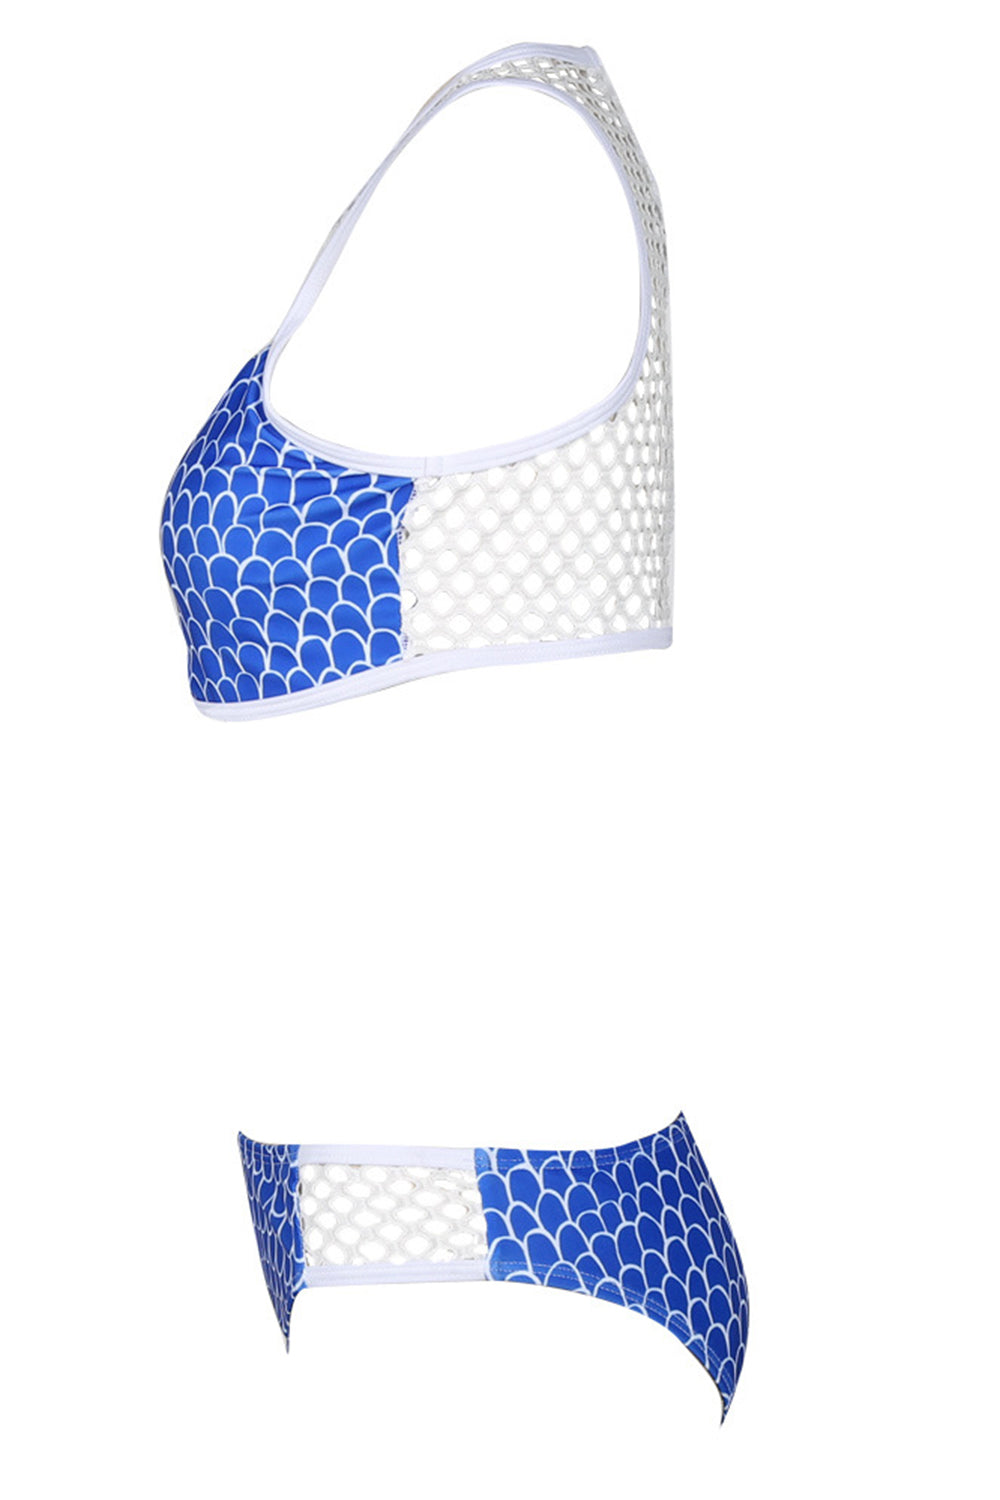 Iyasson Floral Printing Trendy Sport Style Bikini Set